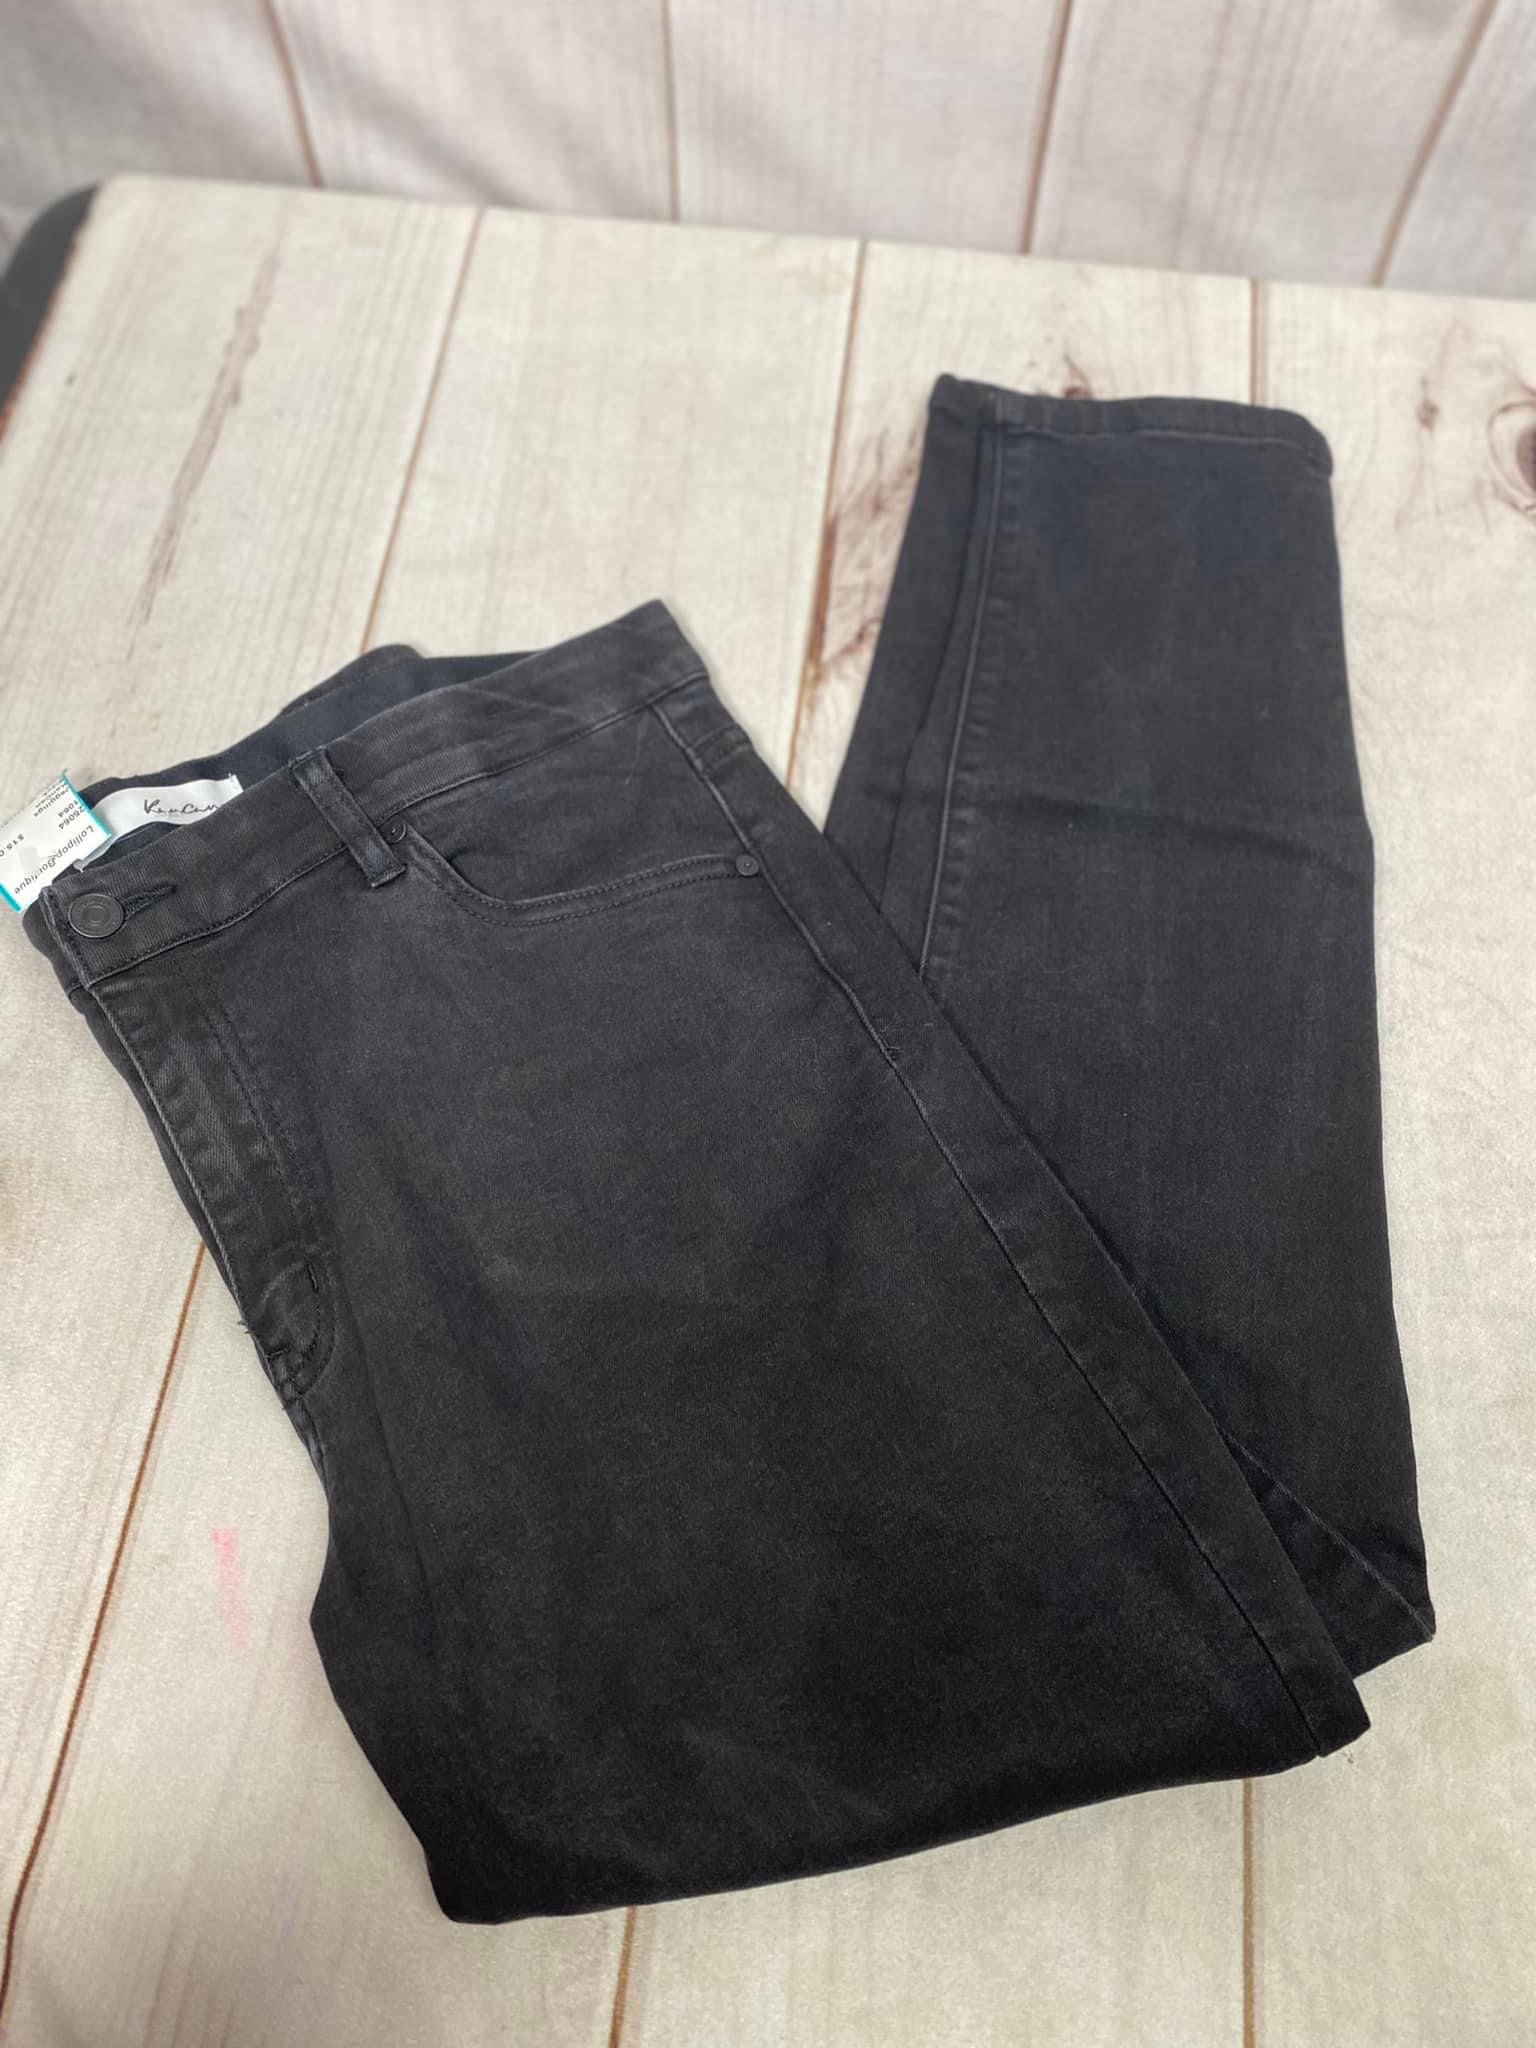 KanCan Jeans - EUC
Washed Black Denim - Skinny Style
Size: Womens 31 Waist - Size 15
Has hidden elastic in waist
38.1% Cotton, 31.2% Tencel, 29.5% Poly, 1.2% Spandex